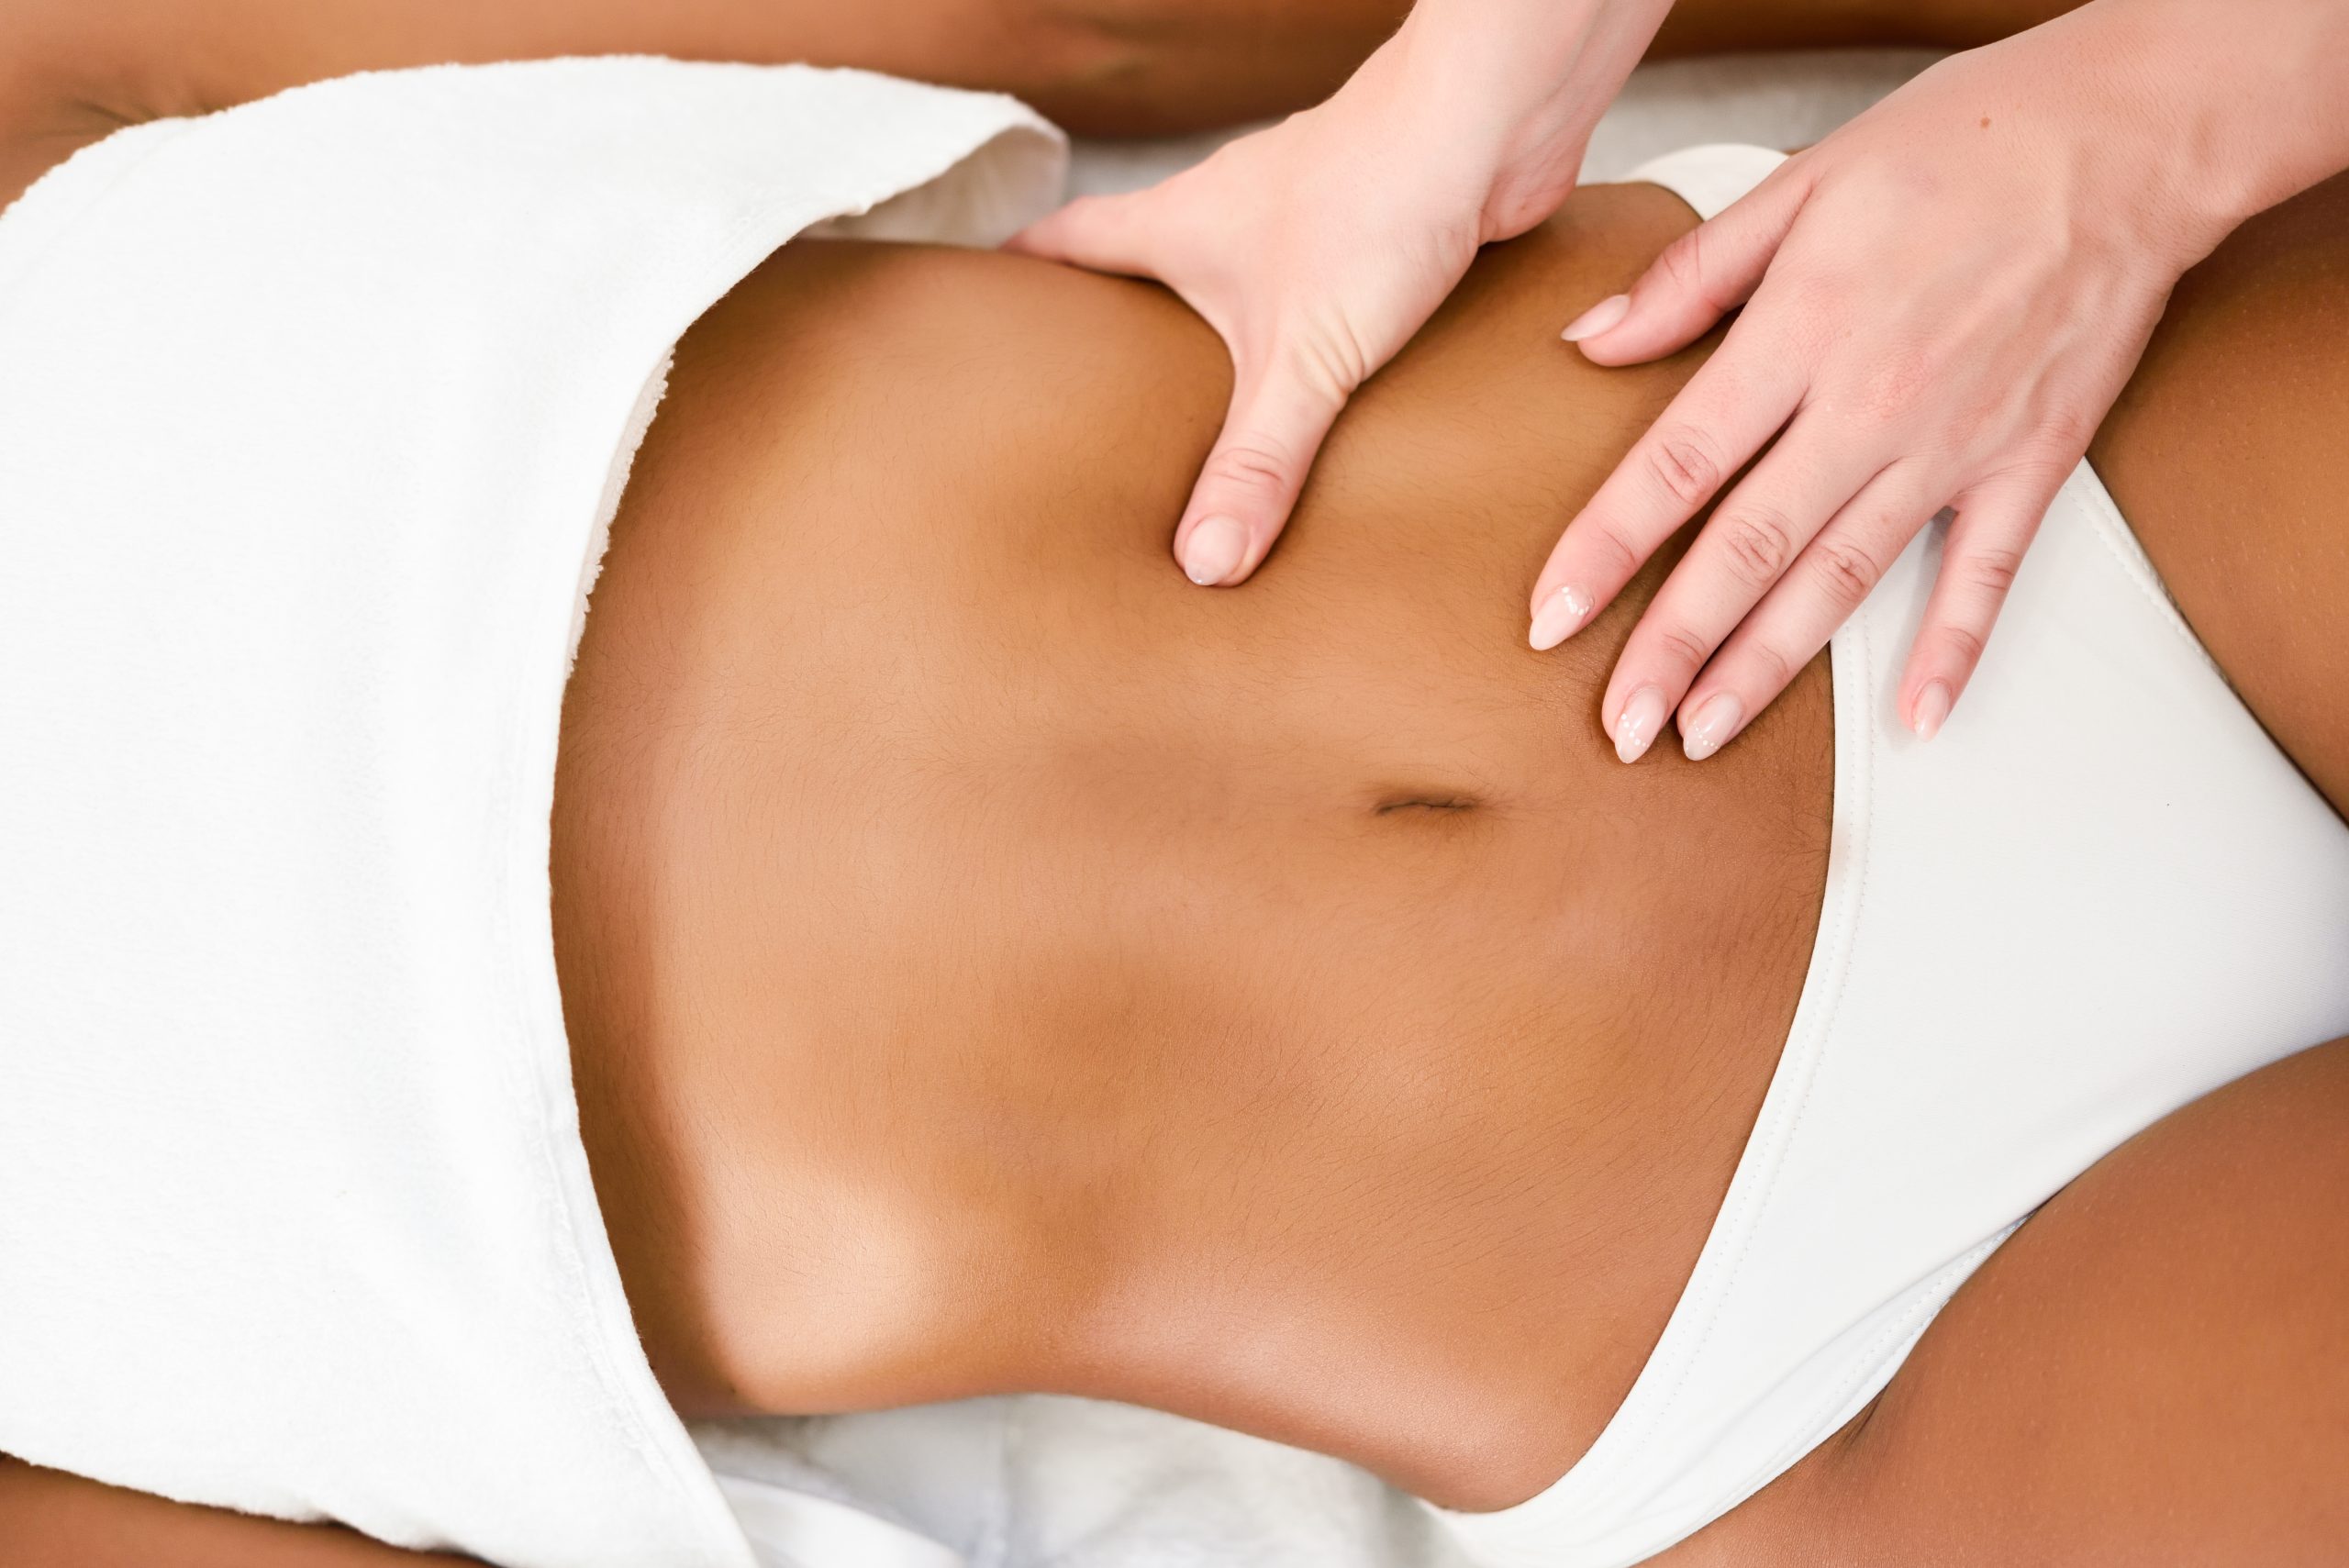 woman receiving abdomen massage spa wellness center scaled